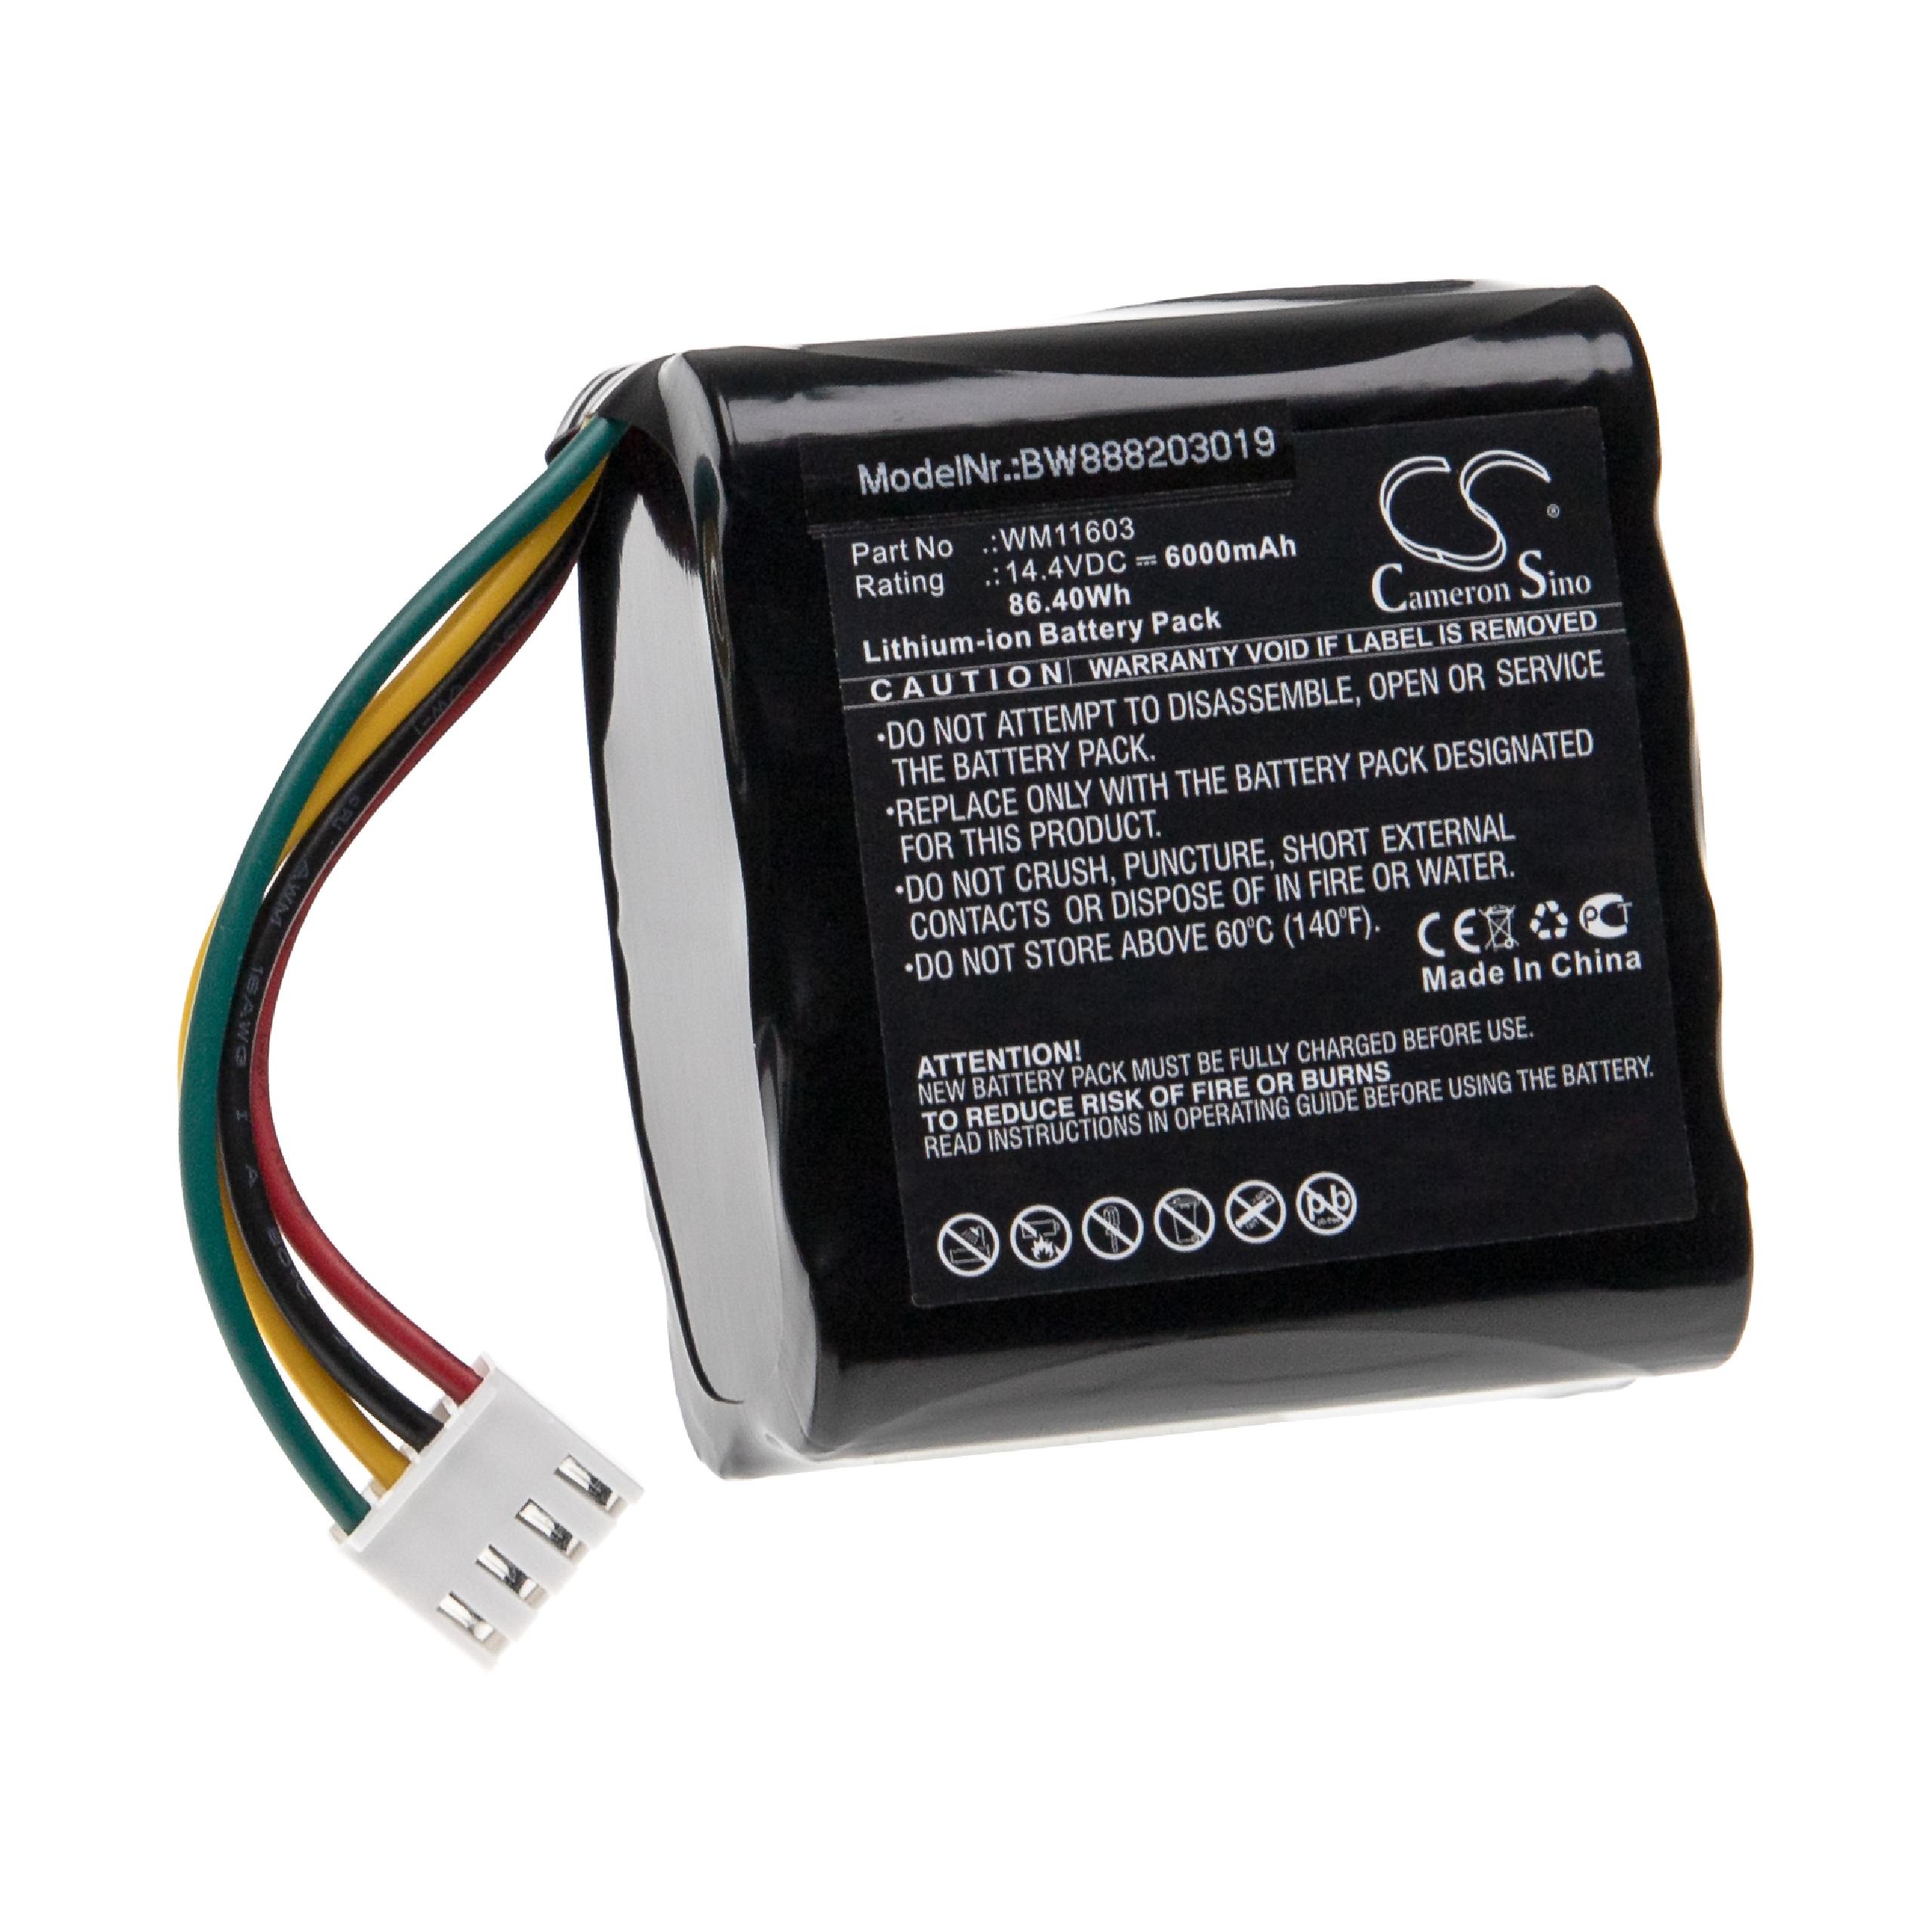 Batterie remplace Weinmann 110746-O, WM11603 pour appareil médical - 6000mAh 14,4V Li-ion